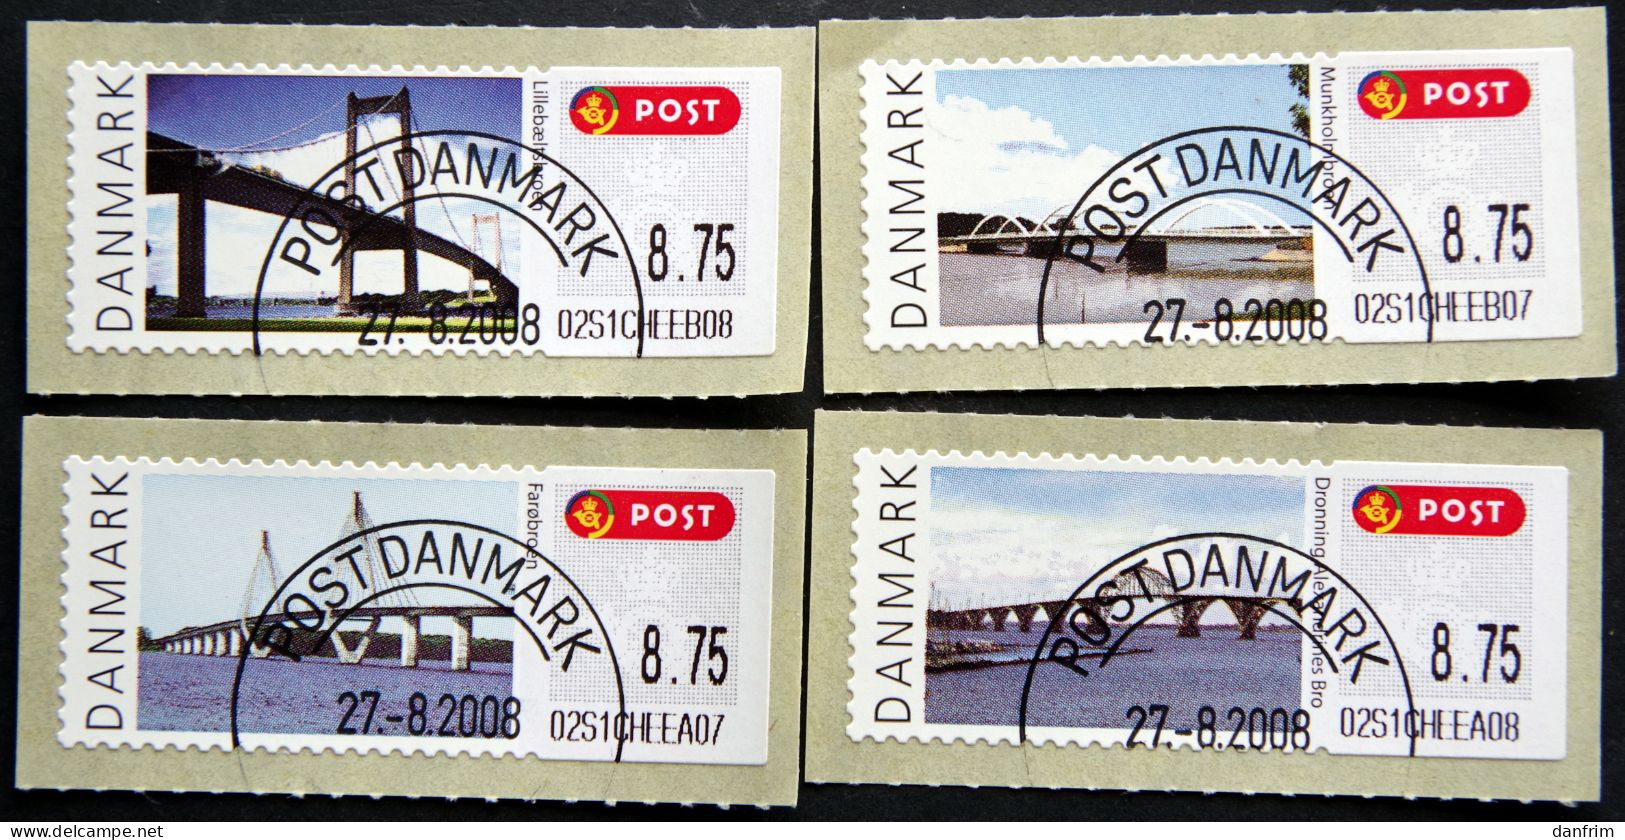 Denmark 2008 MiNr.42-45 (O) ( Lot L 66 ) ATM Franking Labels - Viñetas De Franqueo [ATM]